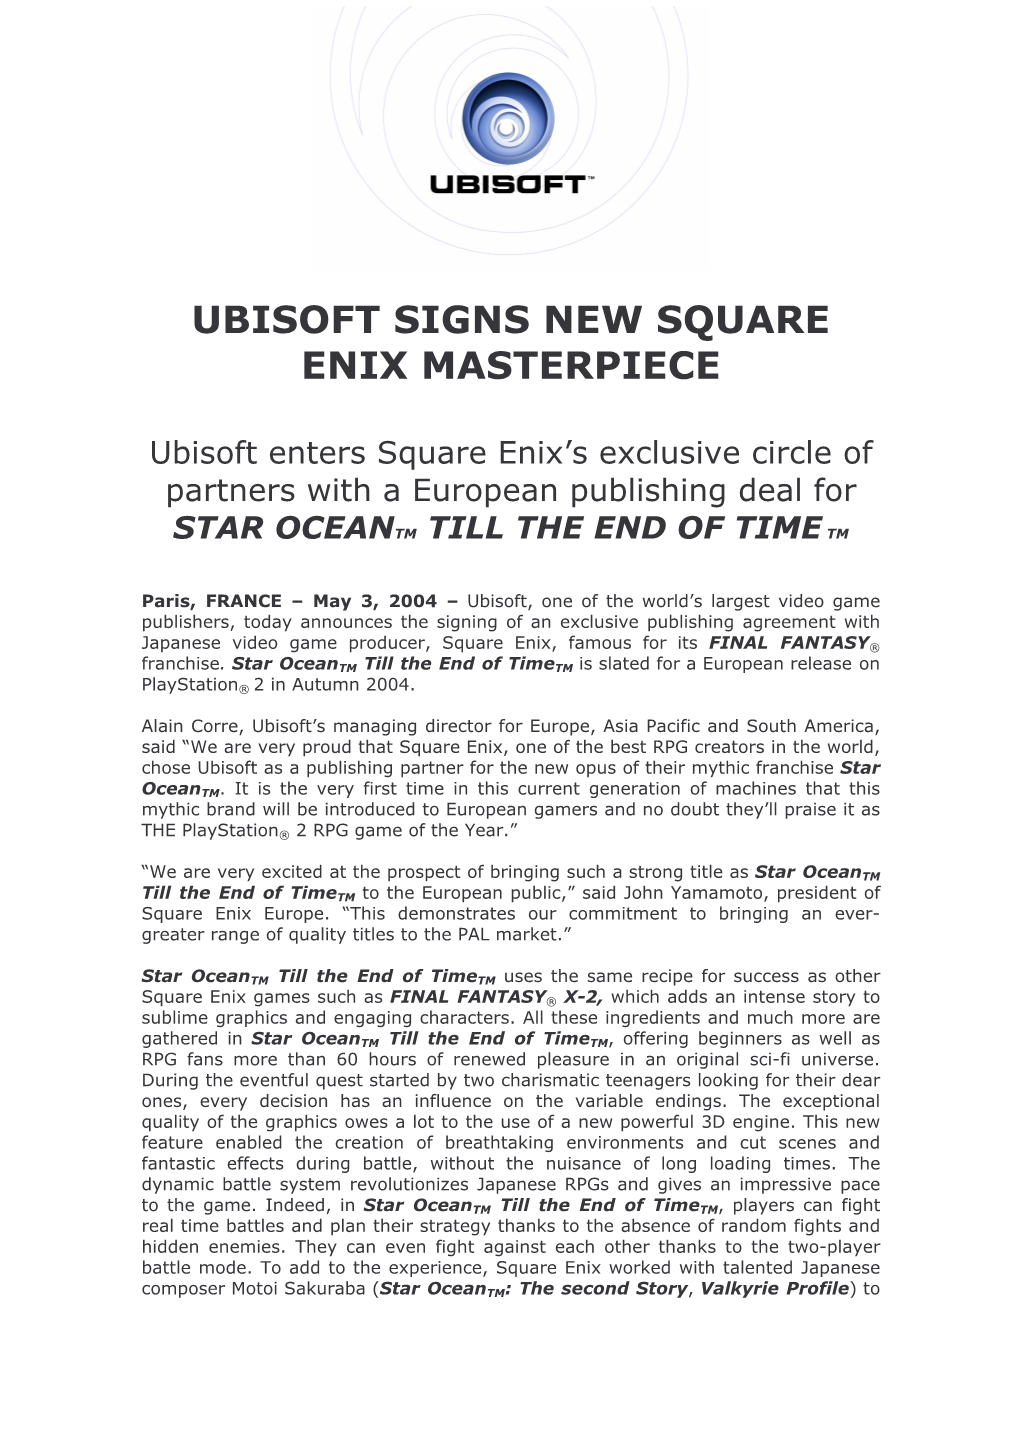 Ubisoft Signs New Square Enix Masterpiece